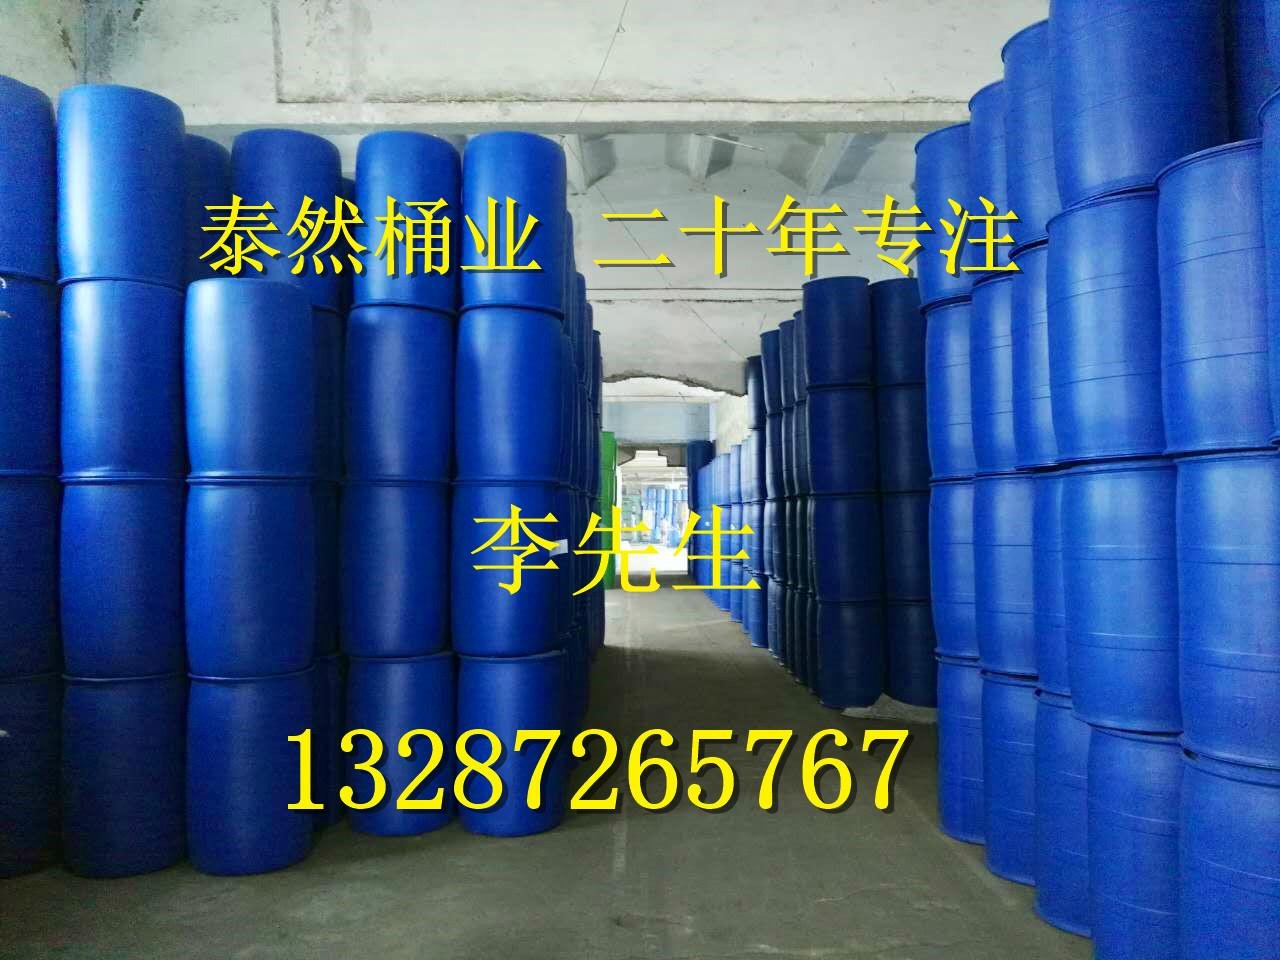 200L甲醇塑料桶|耐高溫耐腐蝕|甲醇塑料包裝桶|質優價廉 5